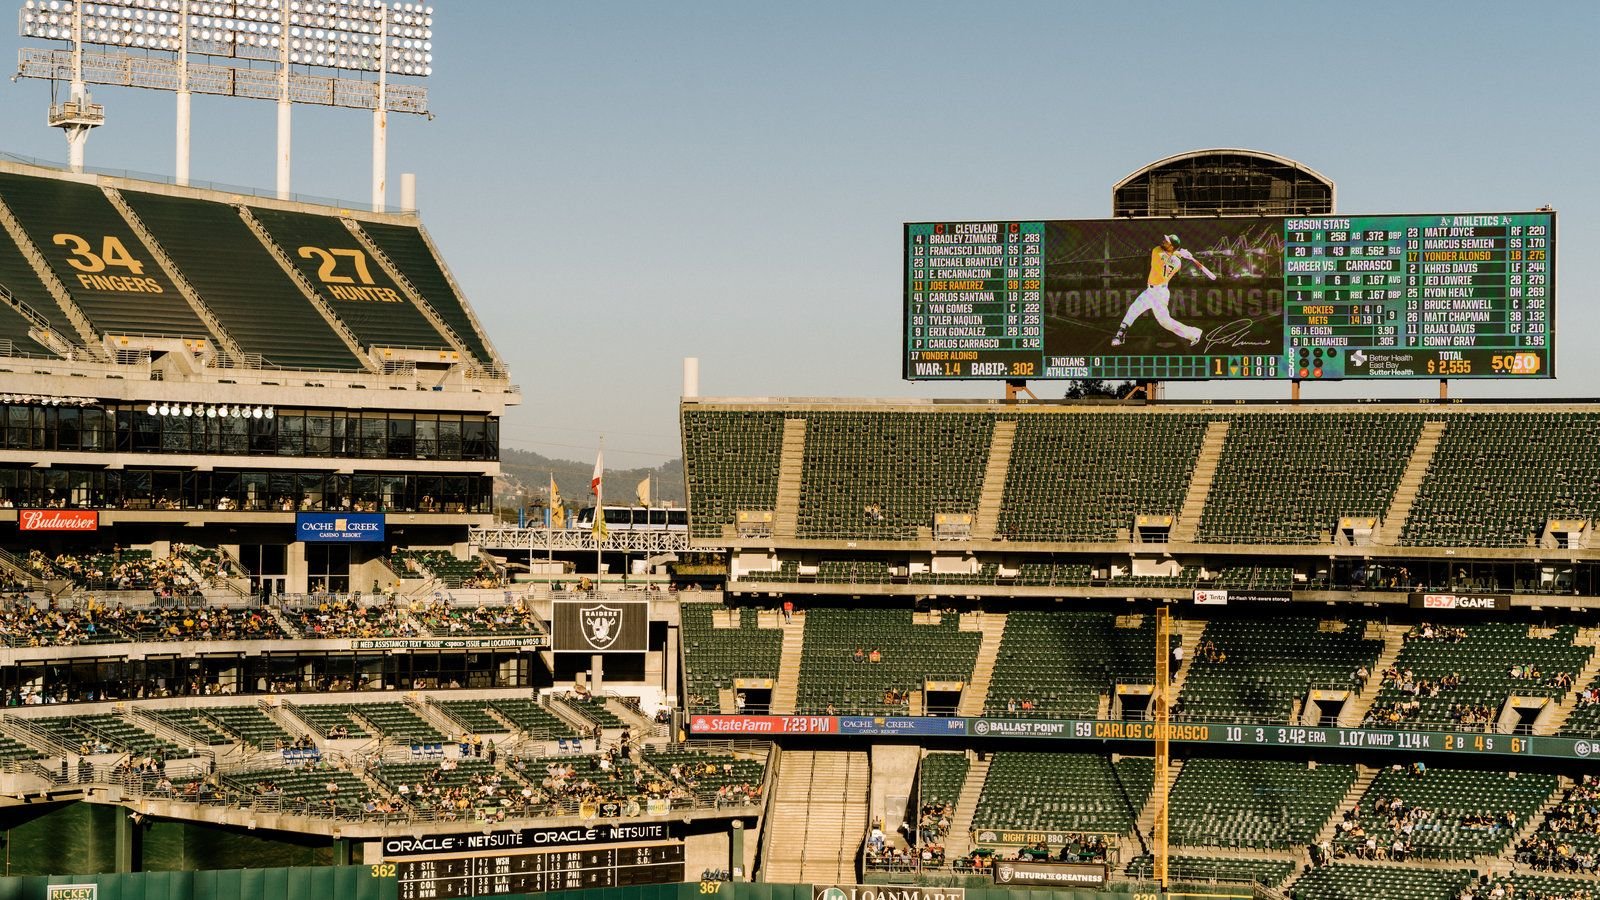 The Beauty of America's Ugliest Ballpark